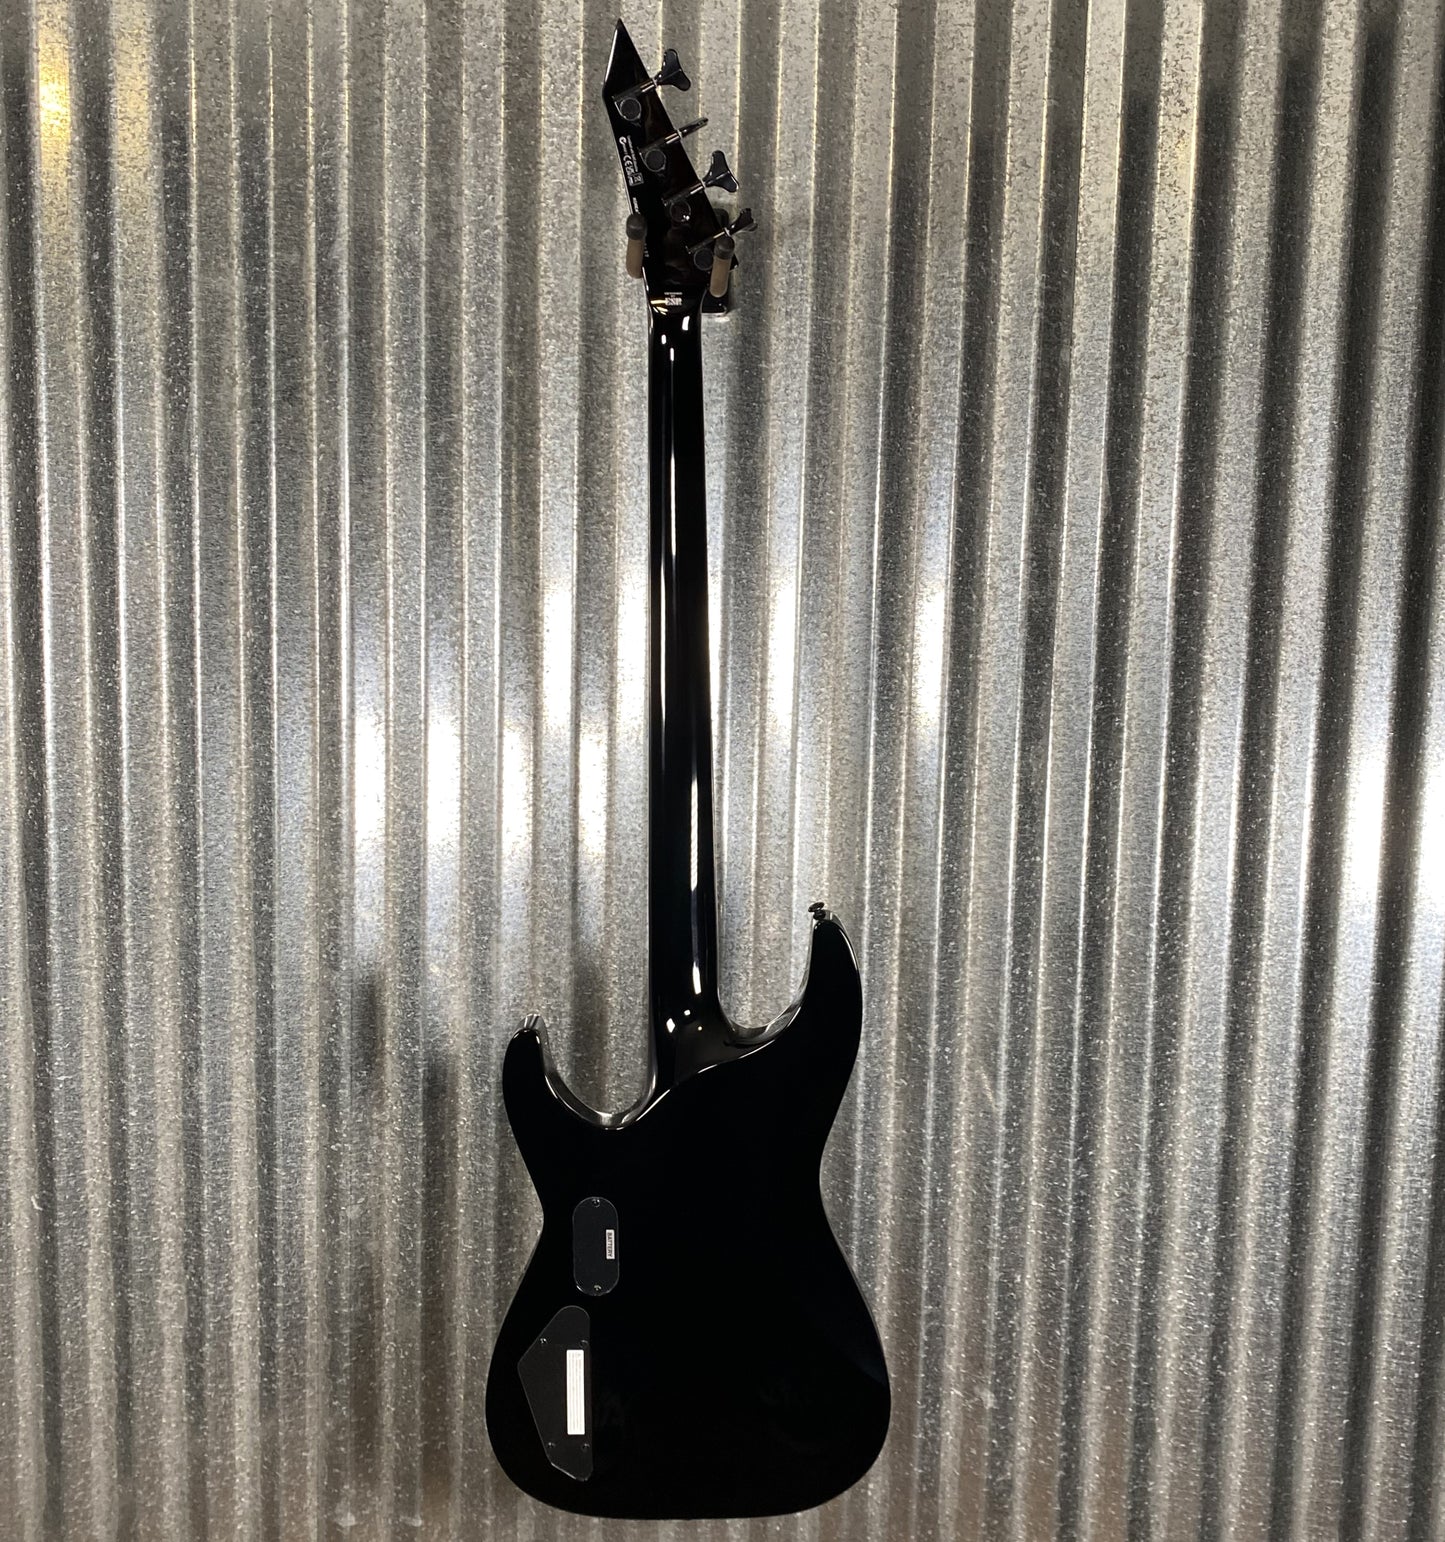 ESP LTD M-1004 4 String Bass Black Satin #0192 Used